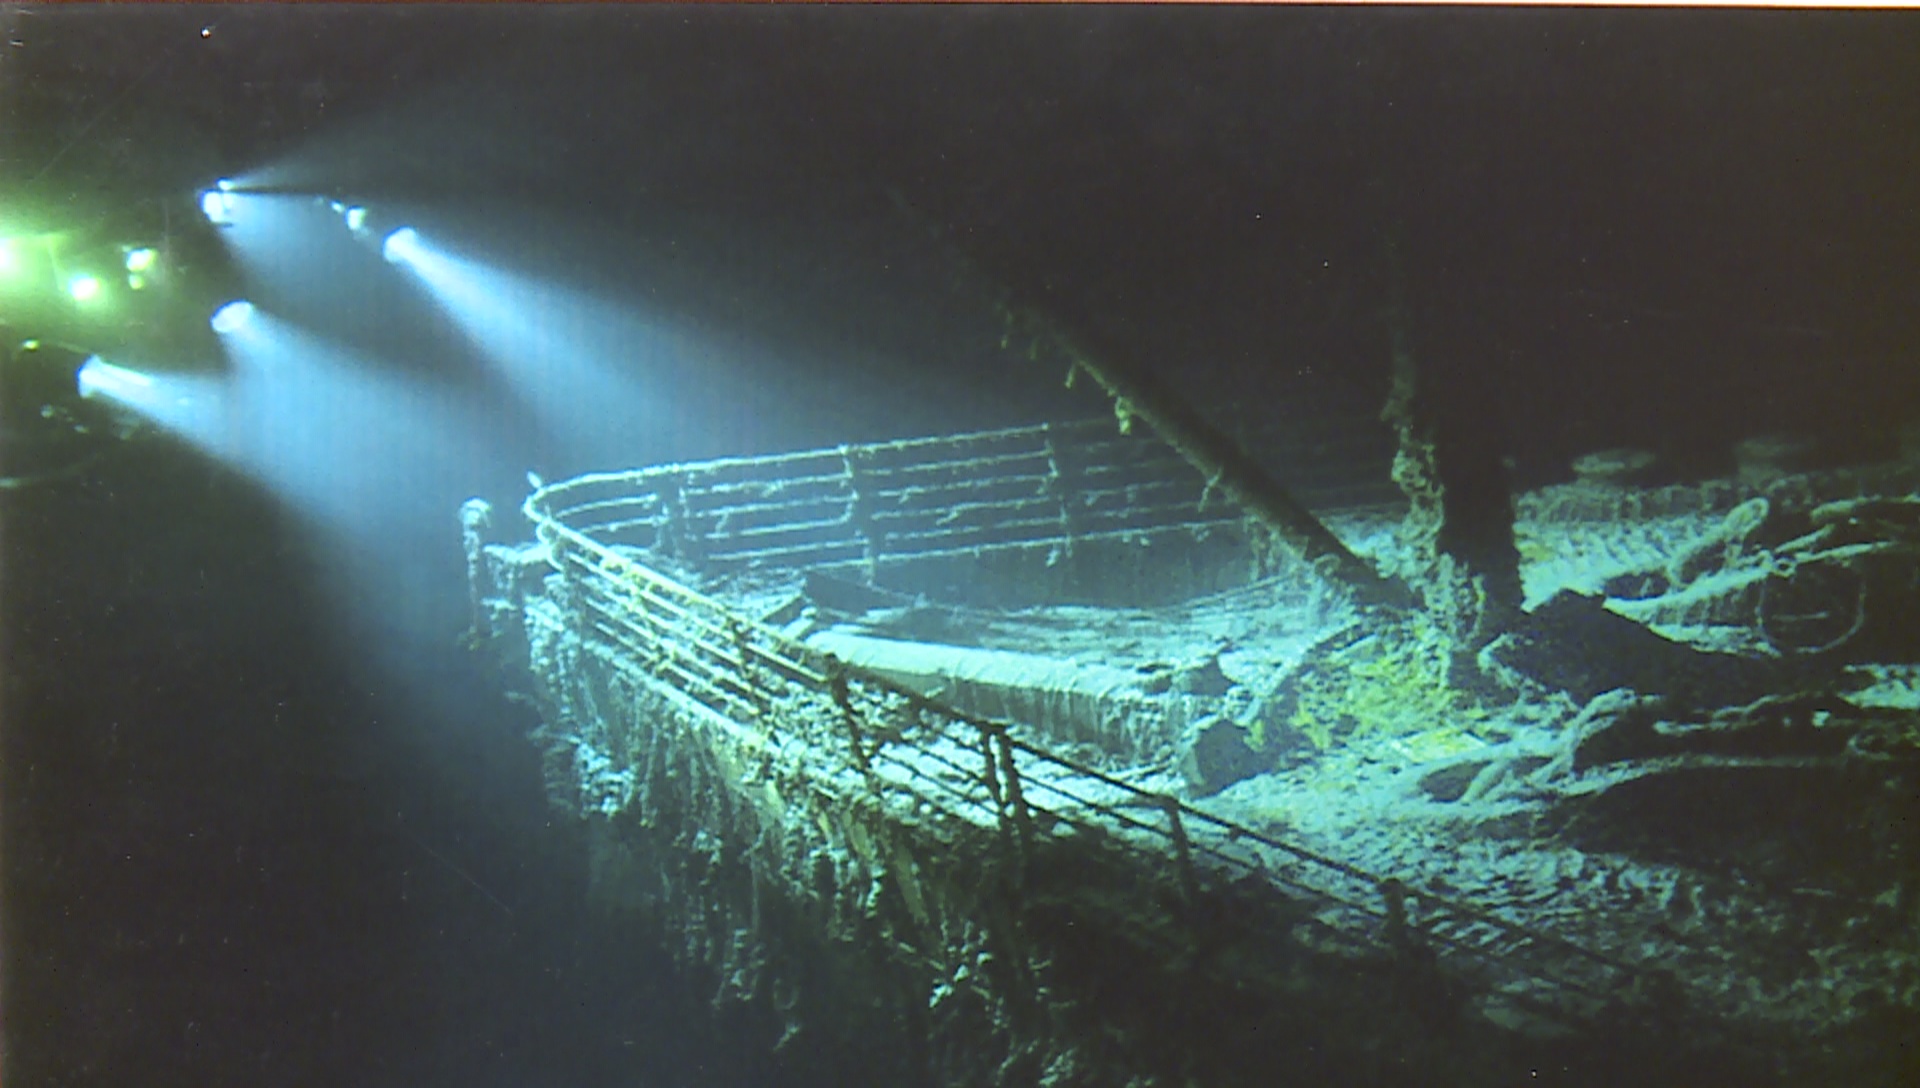 Titanic may be cut open to recover hidden relics inside | Vestnik Kavkaza